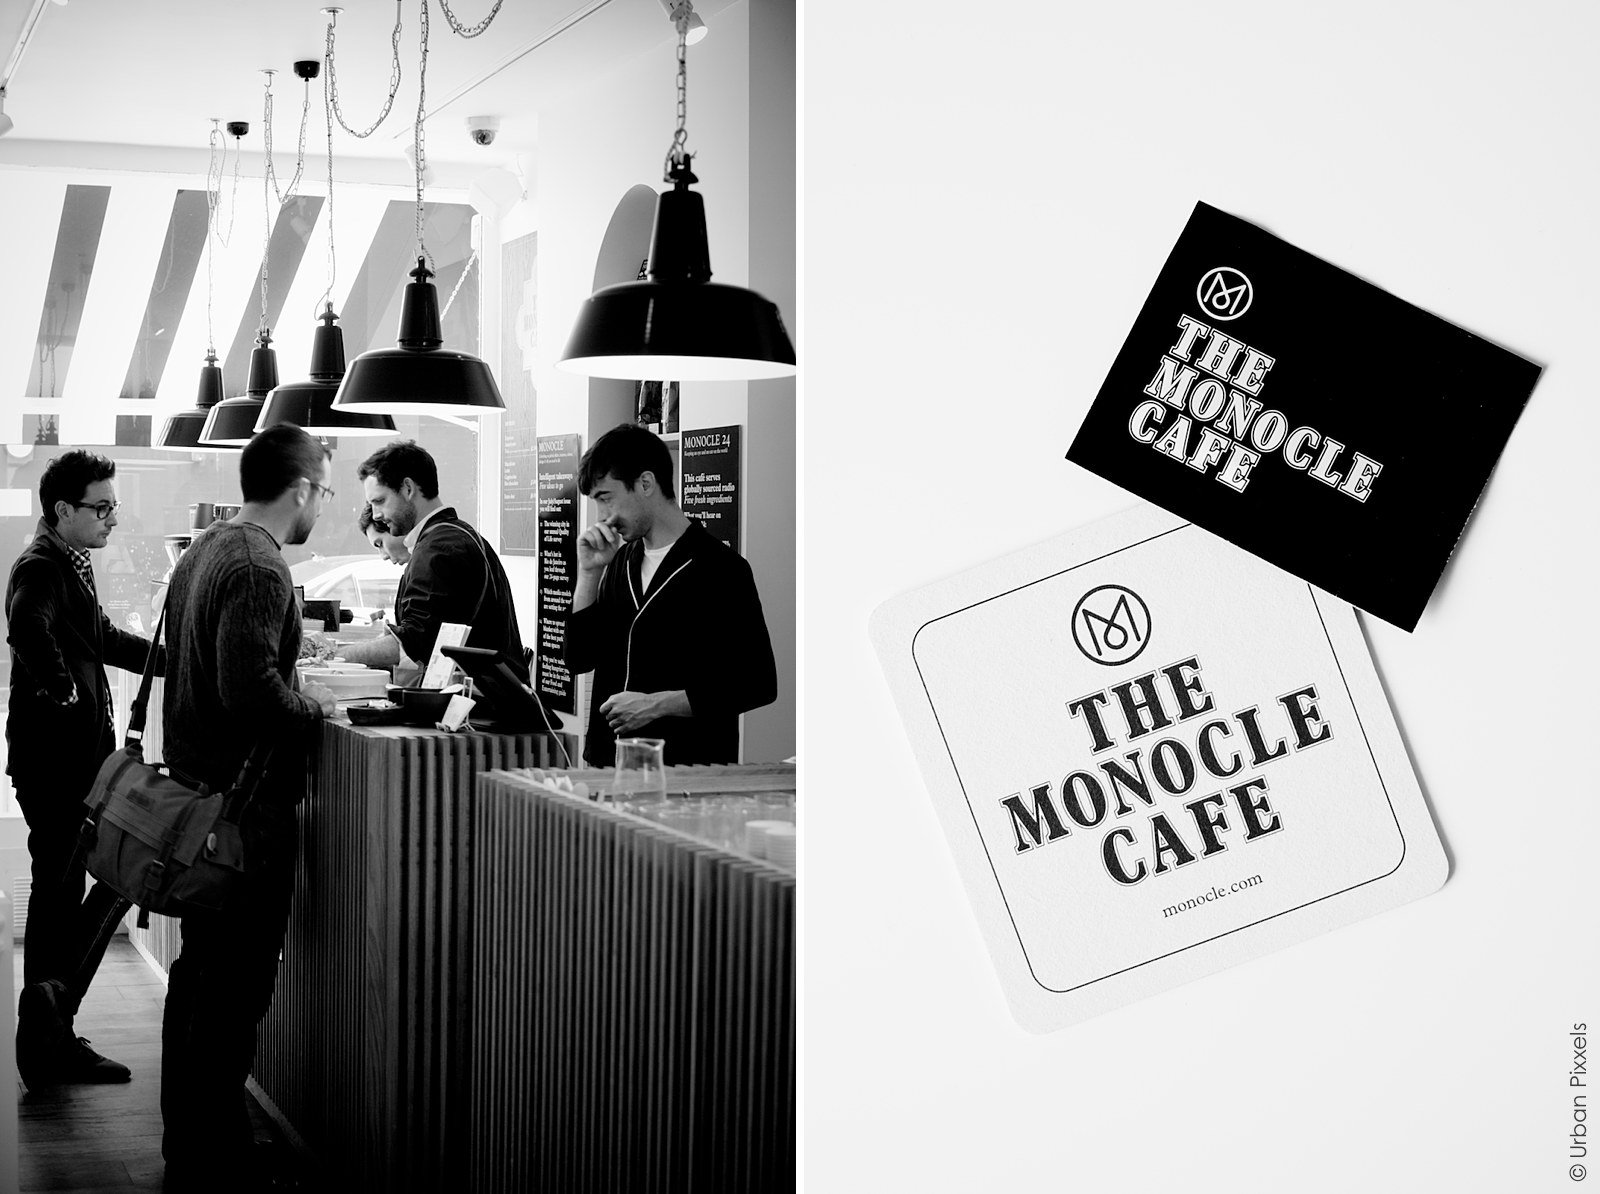 Monocle Cafe London